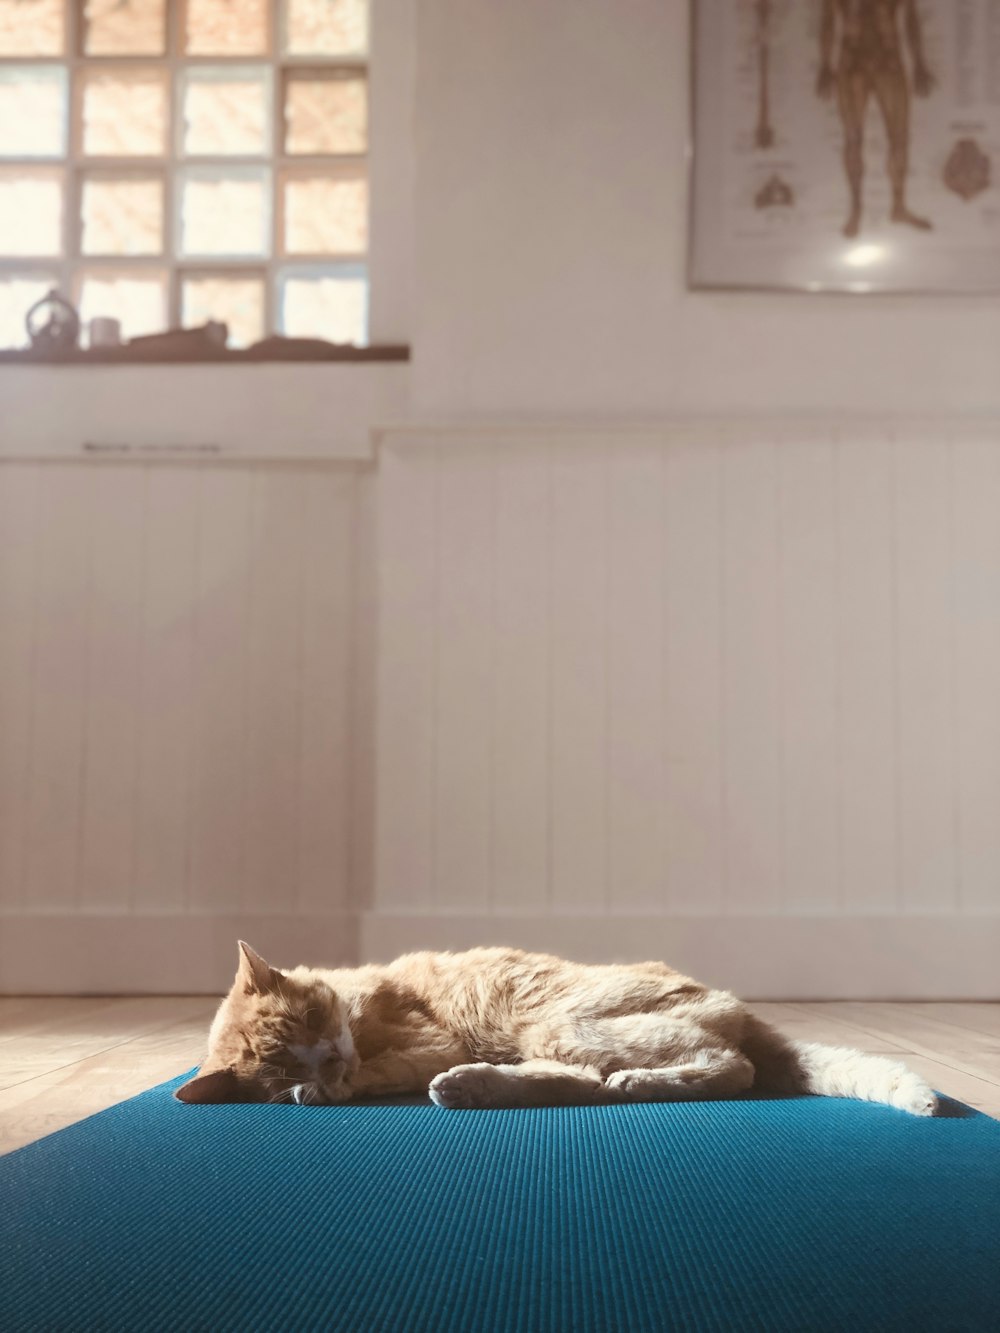 orange tabby cat lying on blue bed